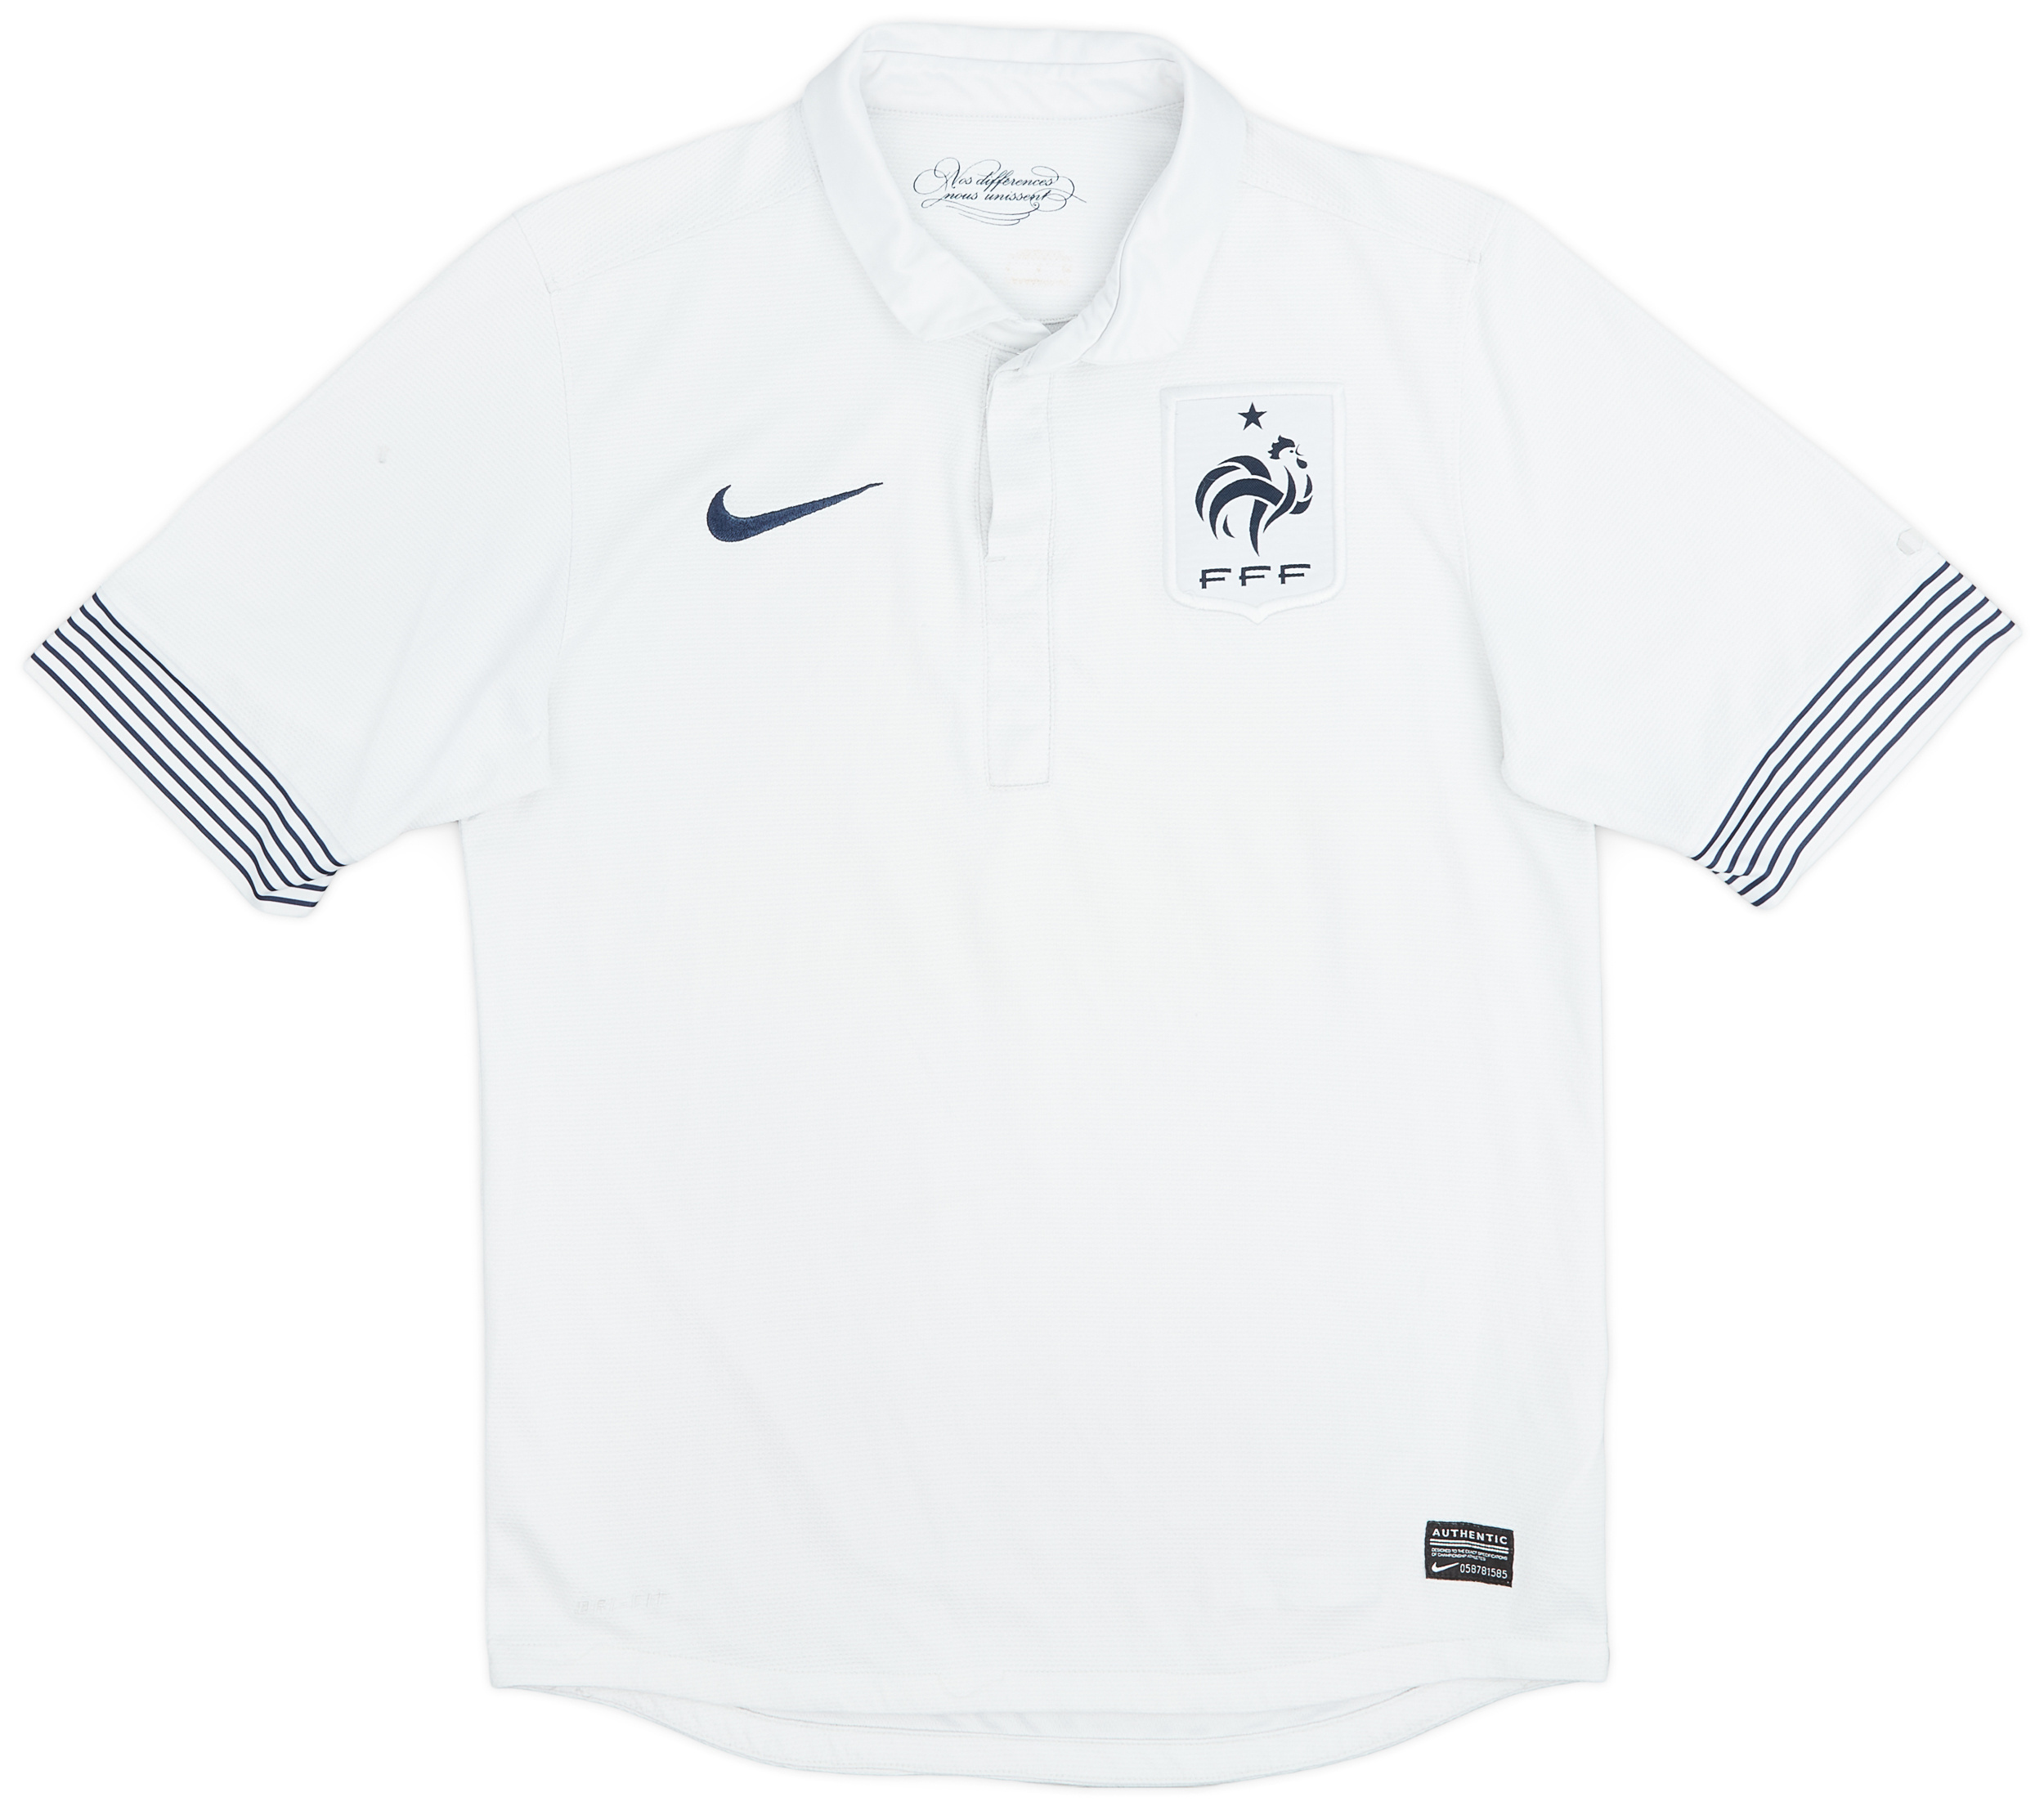 Retro France Shirt